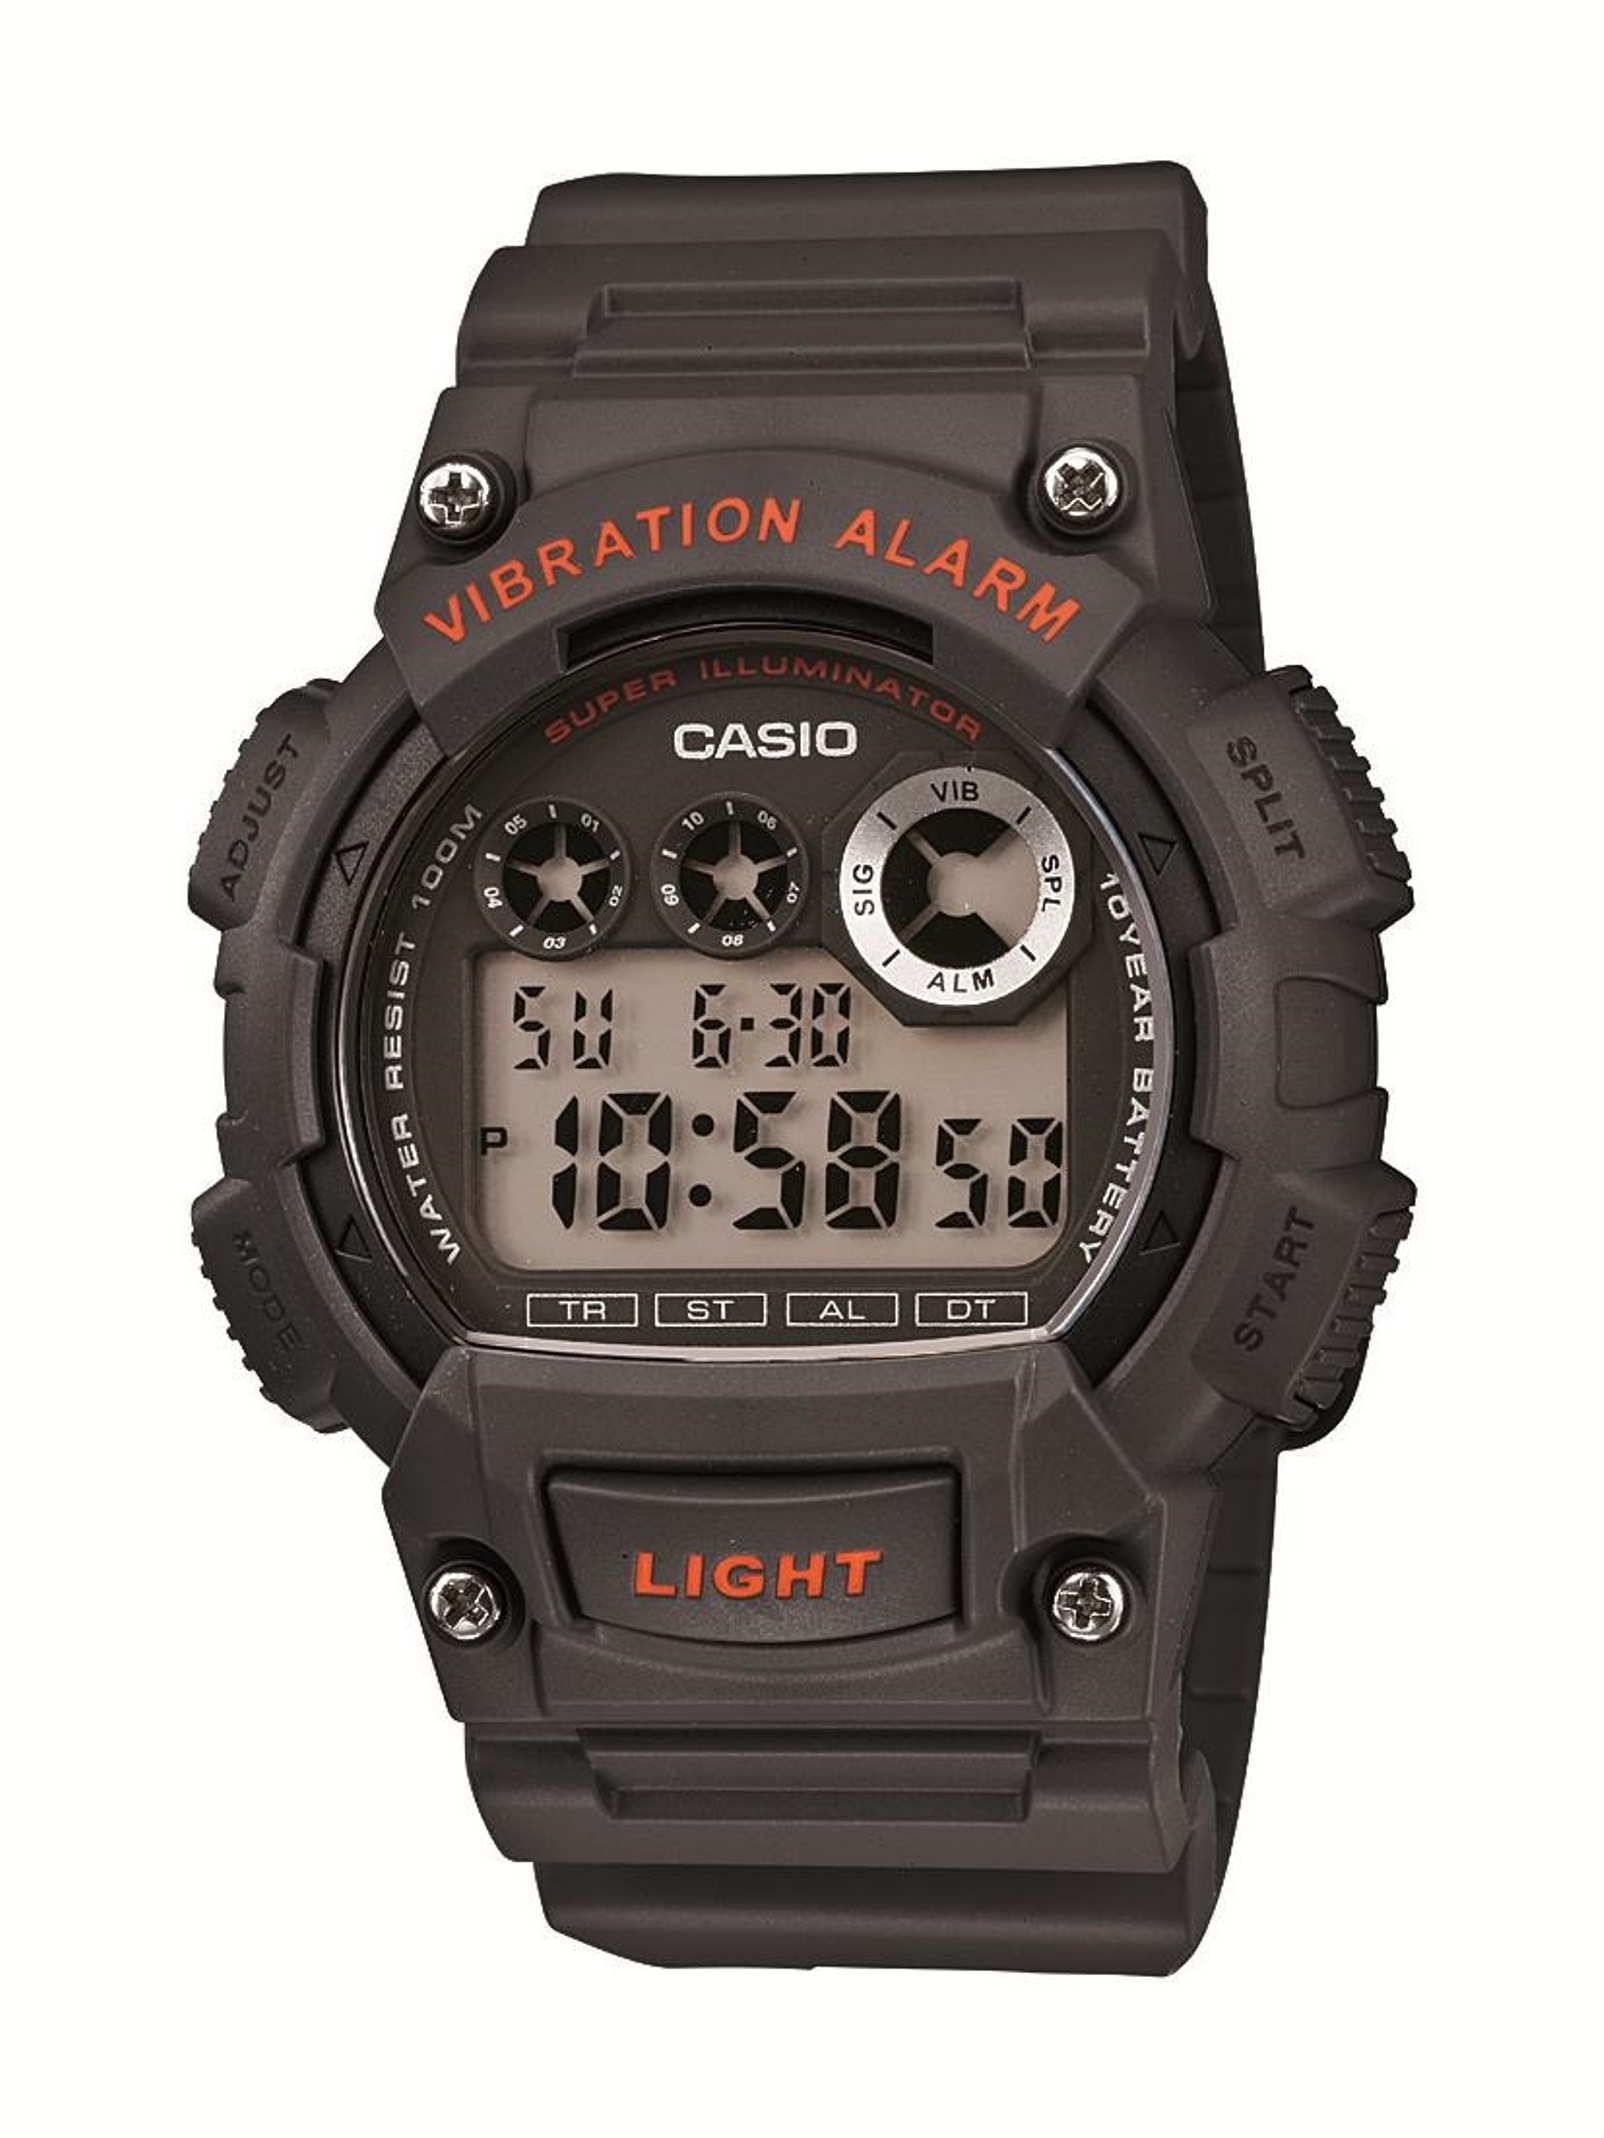 Casio Men's Digital Alarm Watch